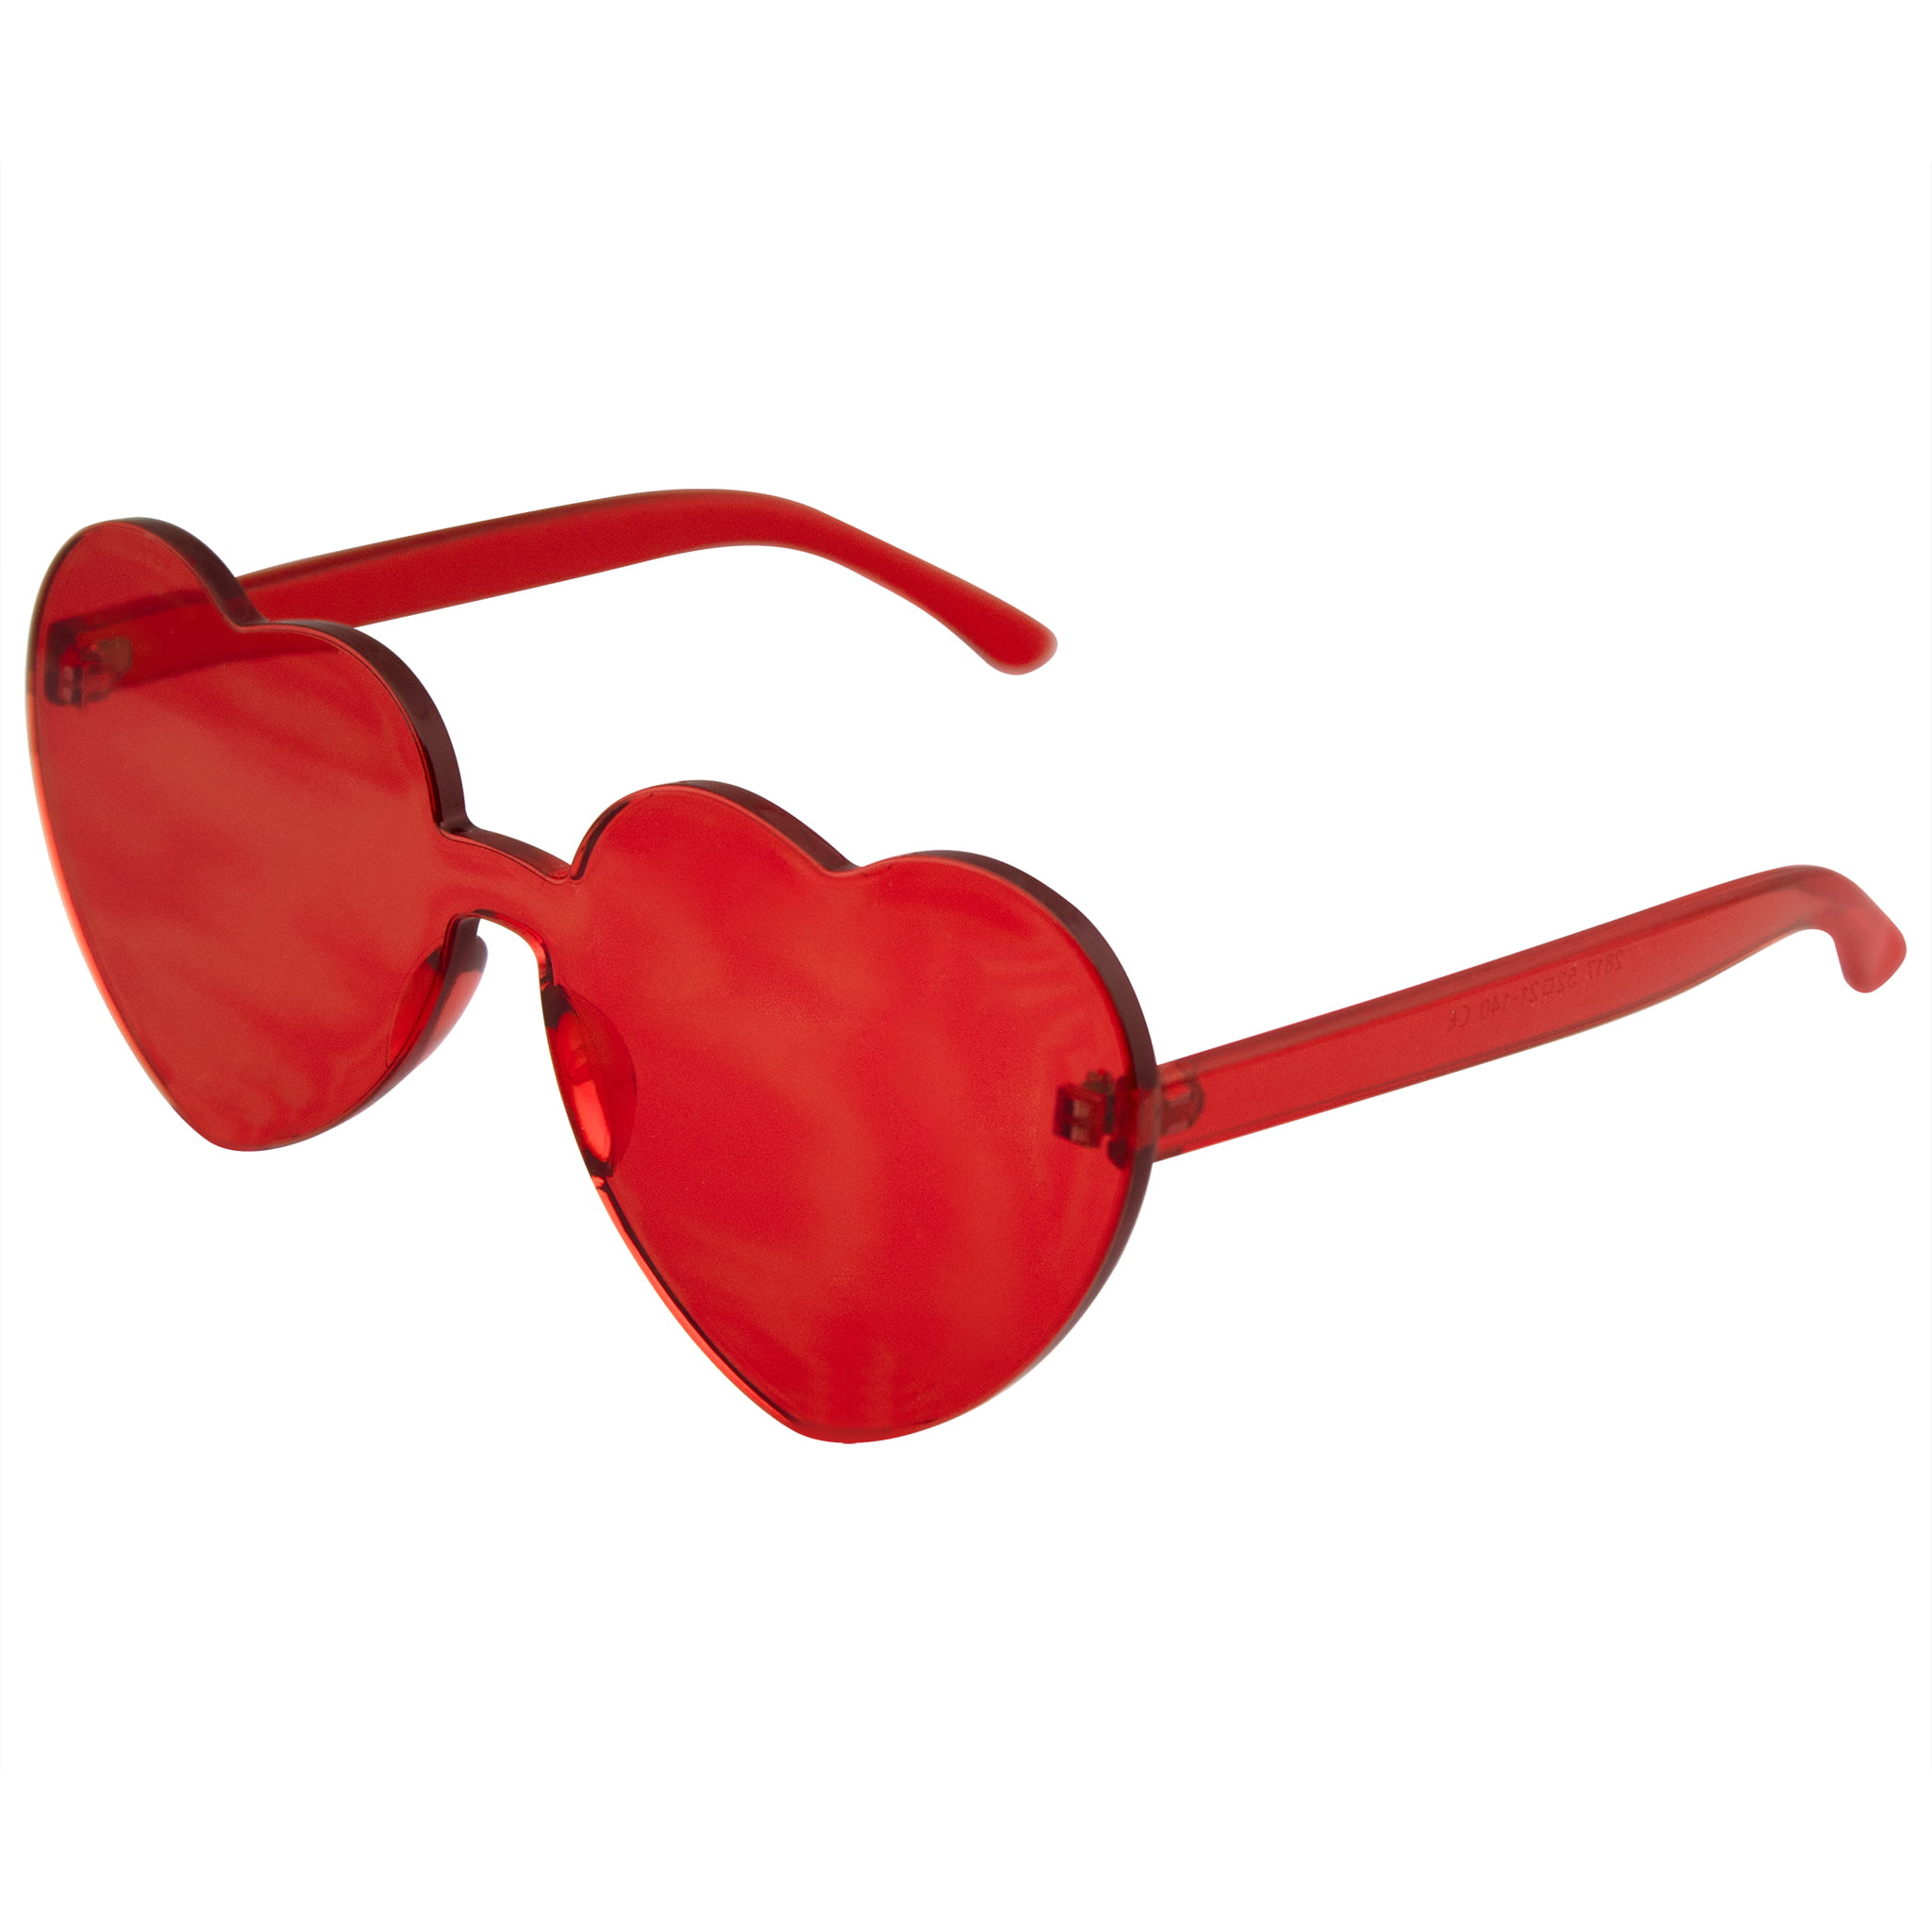 Emblem Eyewear - Heart Sunglasses Retro Heart Shape Sunglasses 